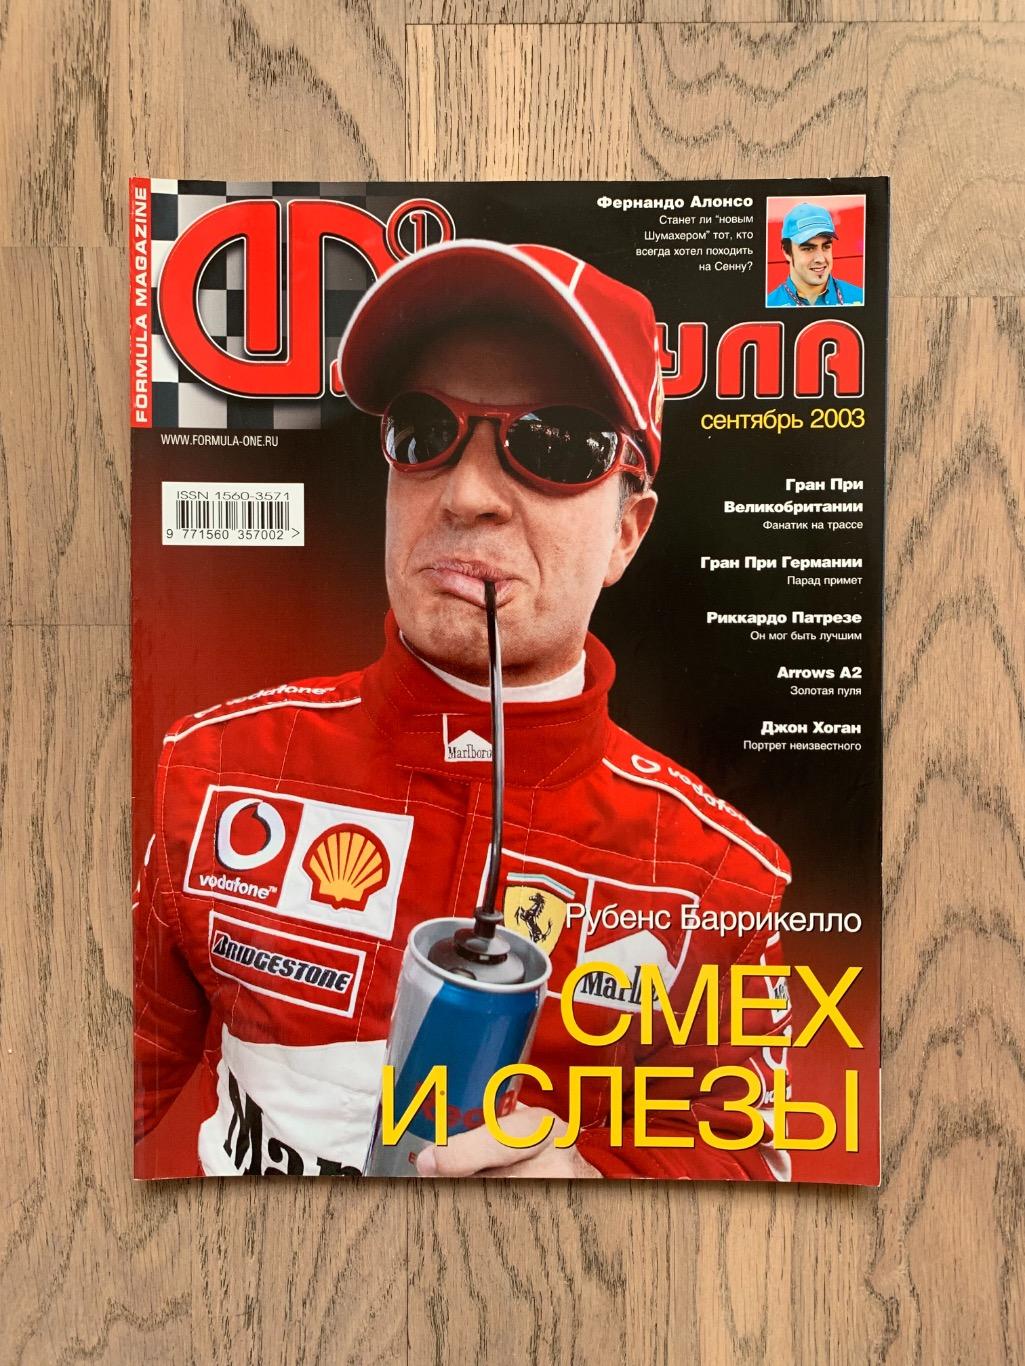 Журнал Формула 1 (Formula Magazine) / сентябрь 2003